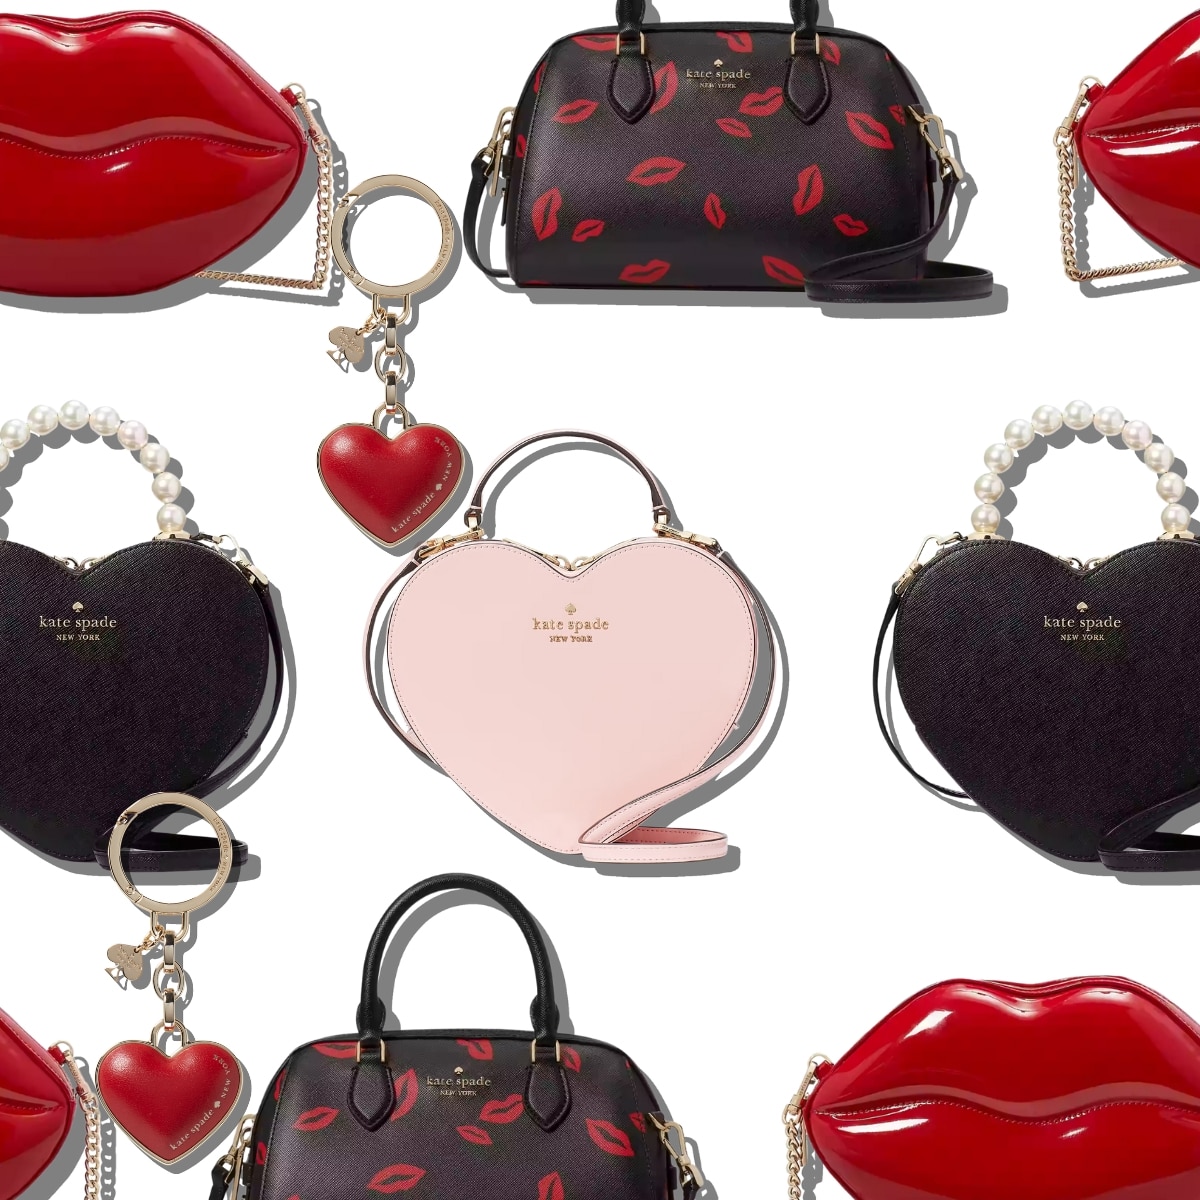 Kate Spade Yours truly chocolate heart bag | Heart bag, Kate spade bag, Bags